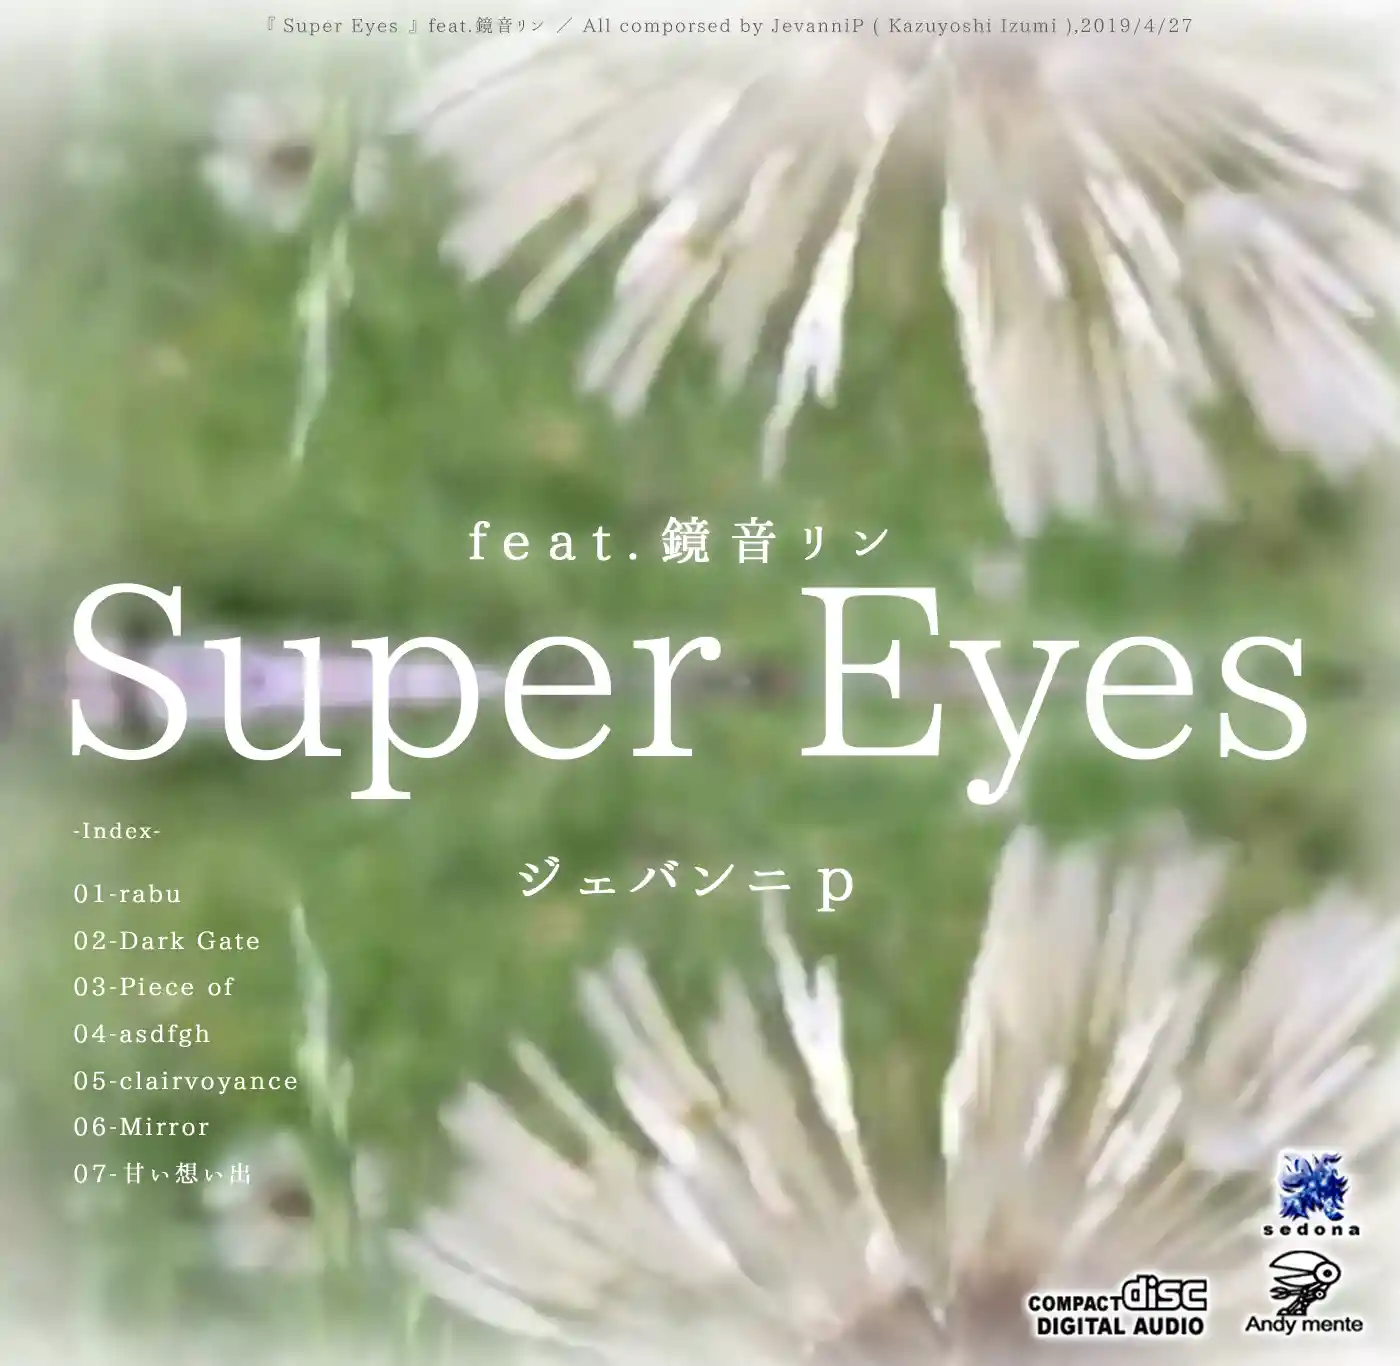 Super Eyes